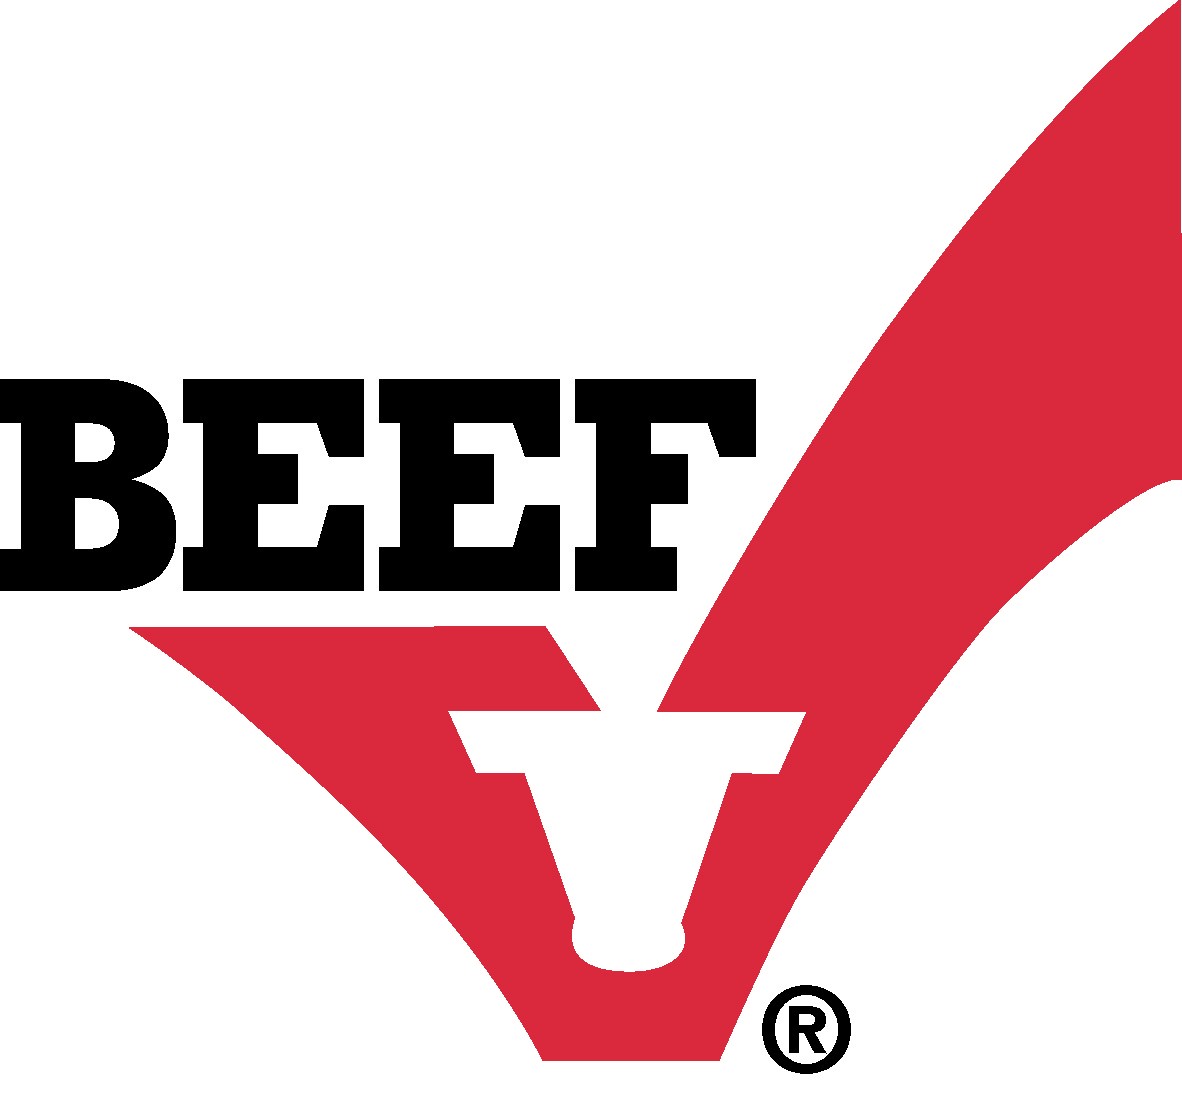 Georgia Beef Board   Home